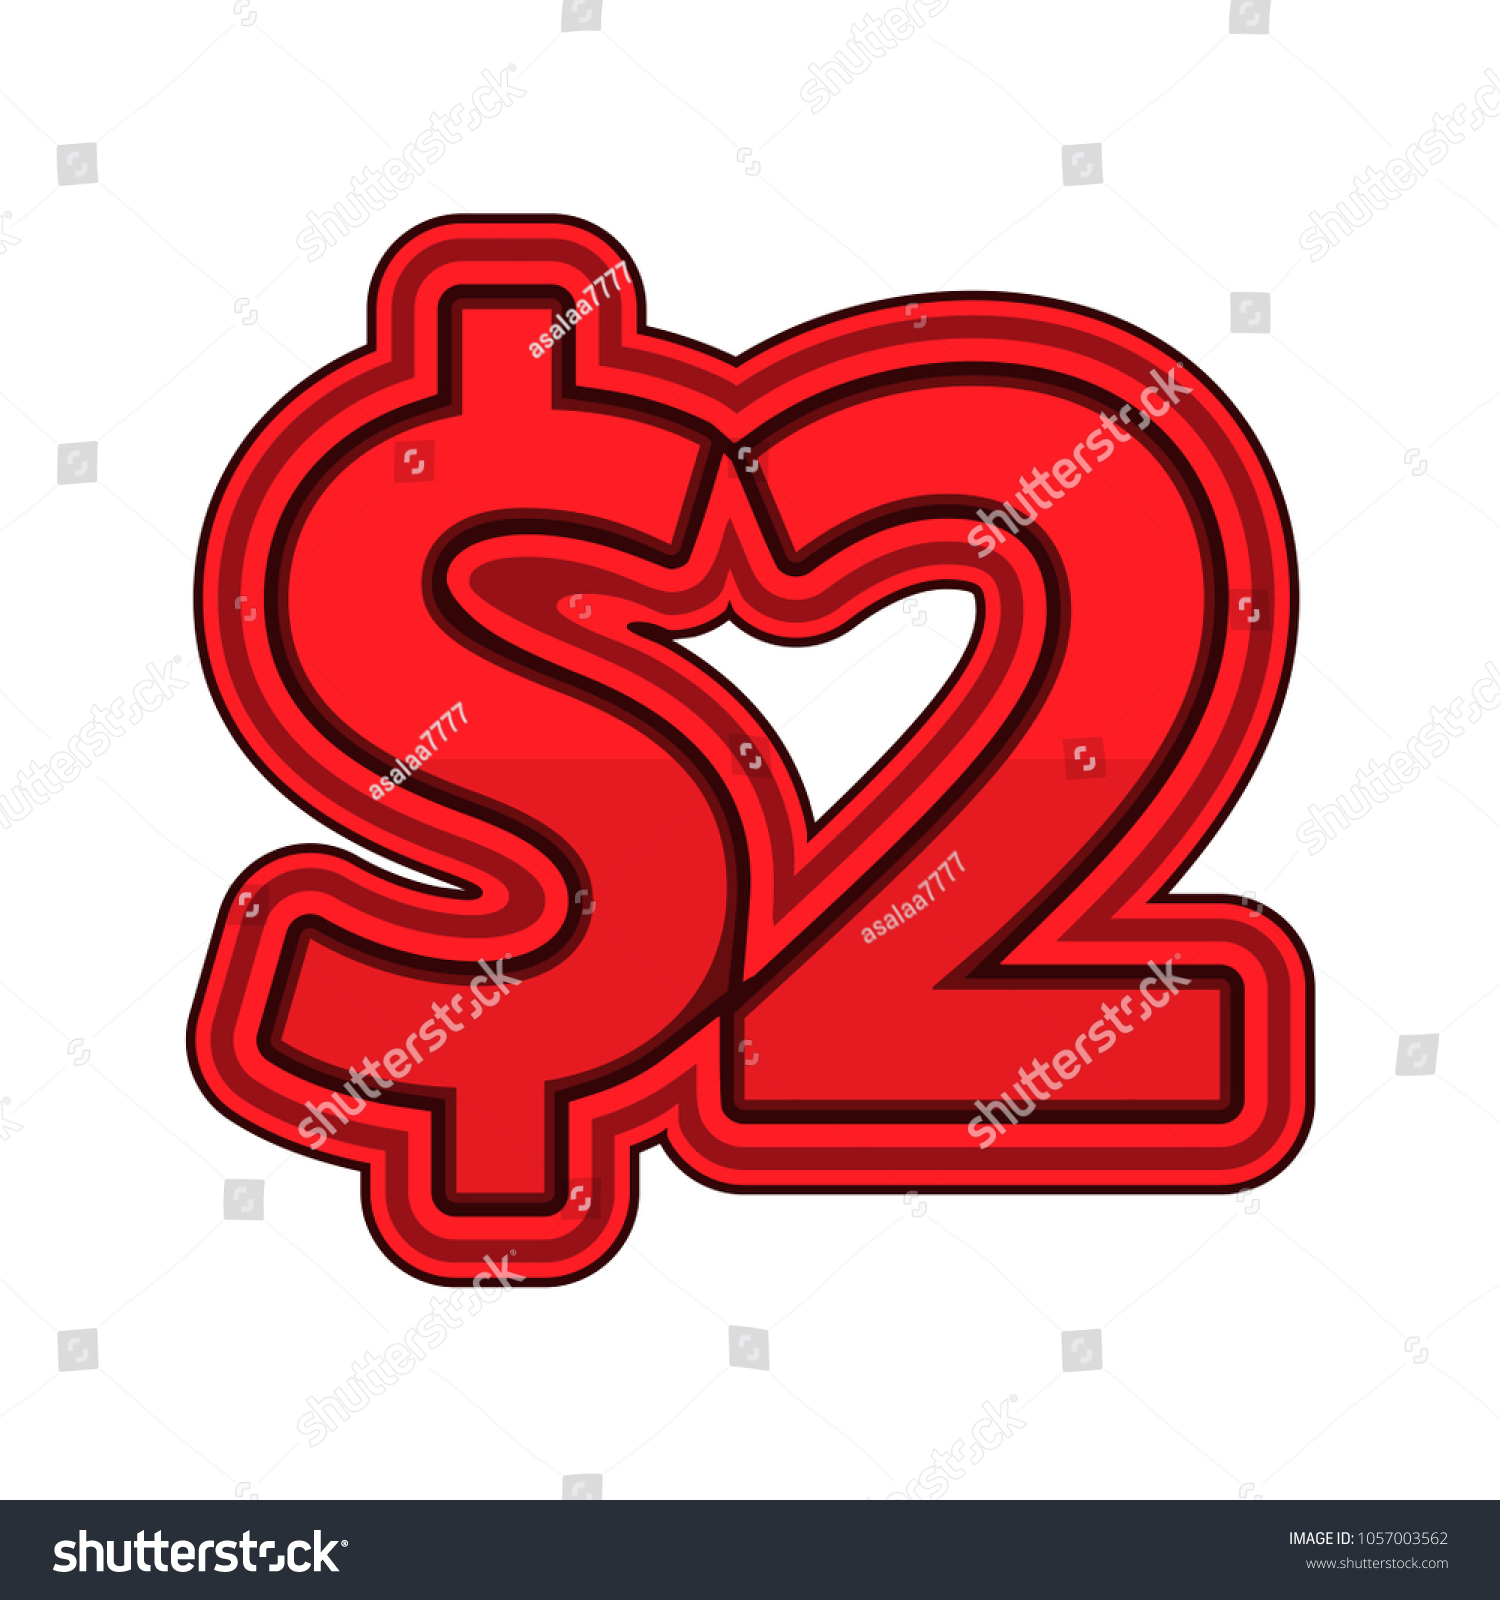 SVG of Illustration Vector of price 2 dollars svg